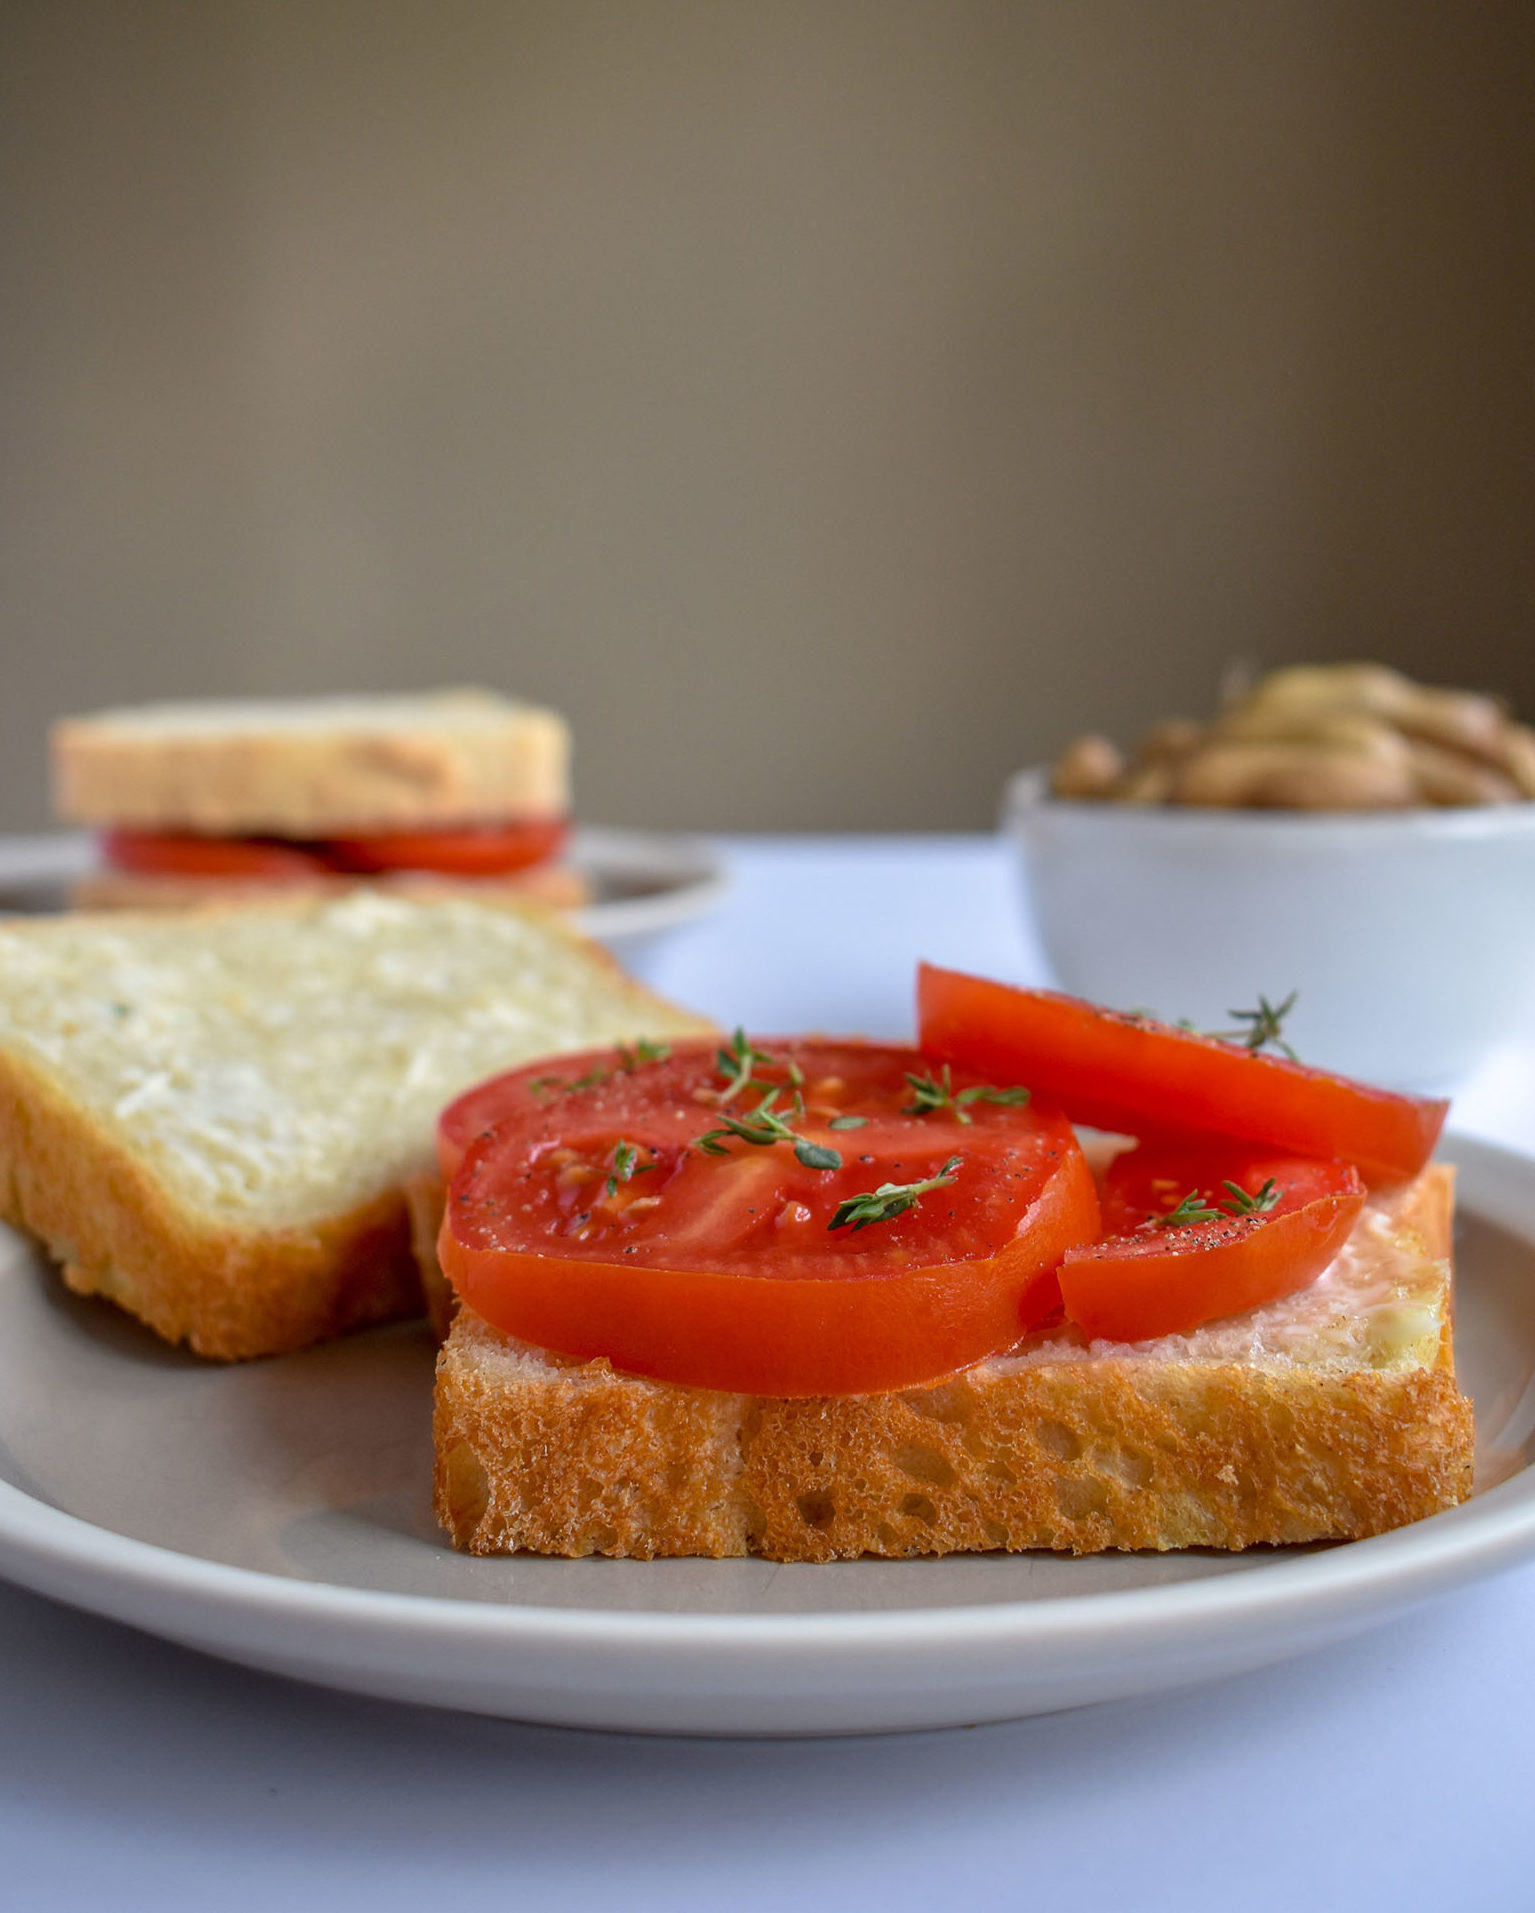 Tomato and Mayo Sandwiches